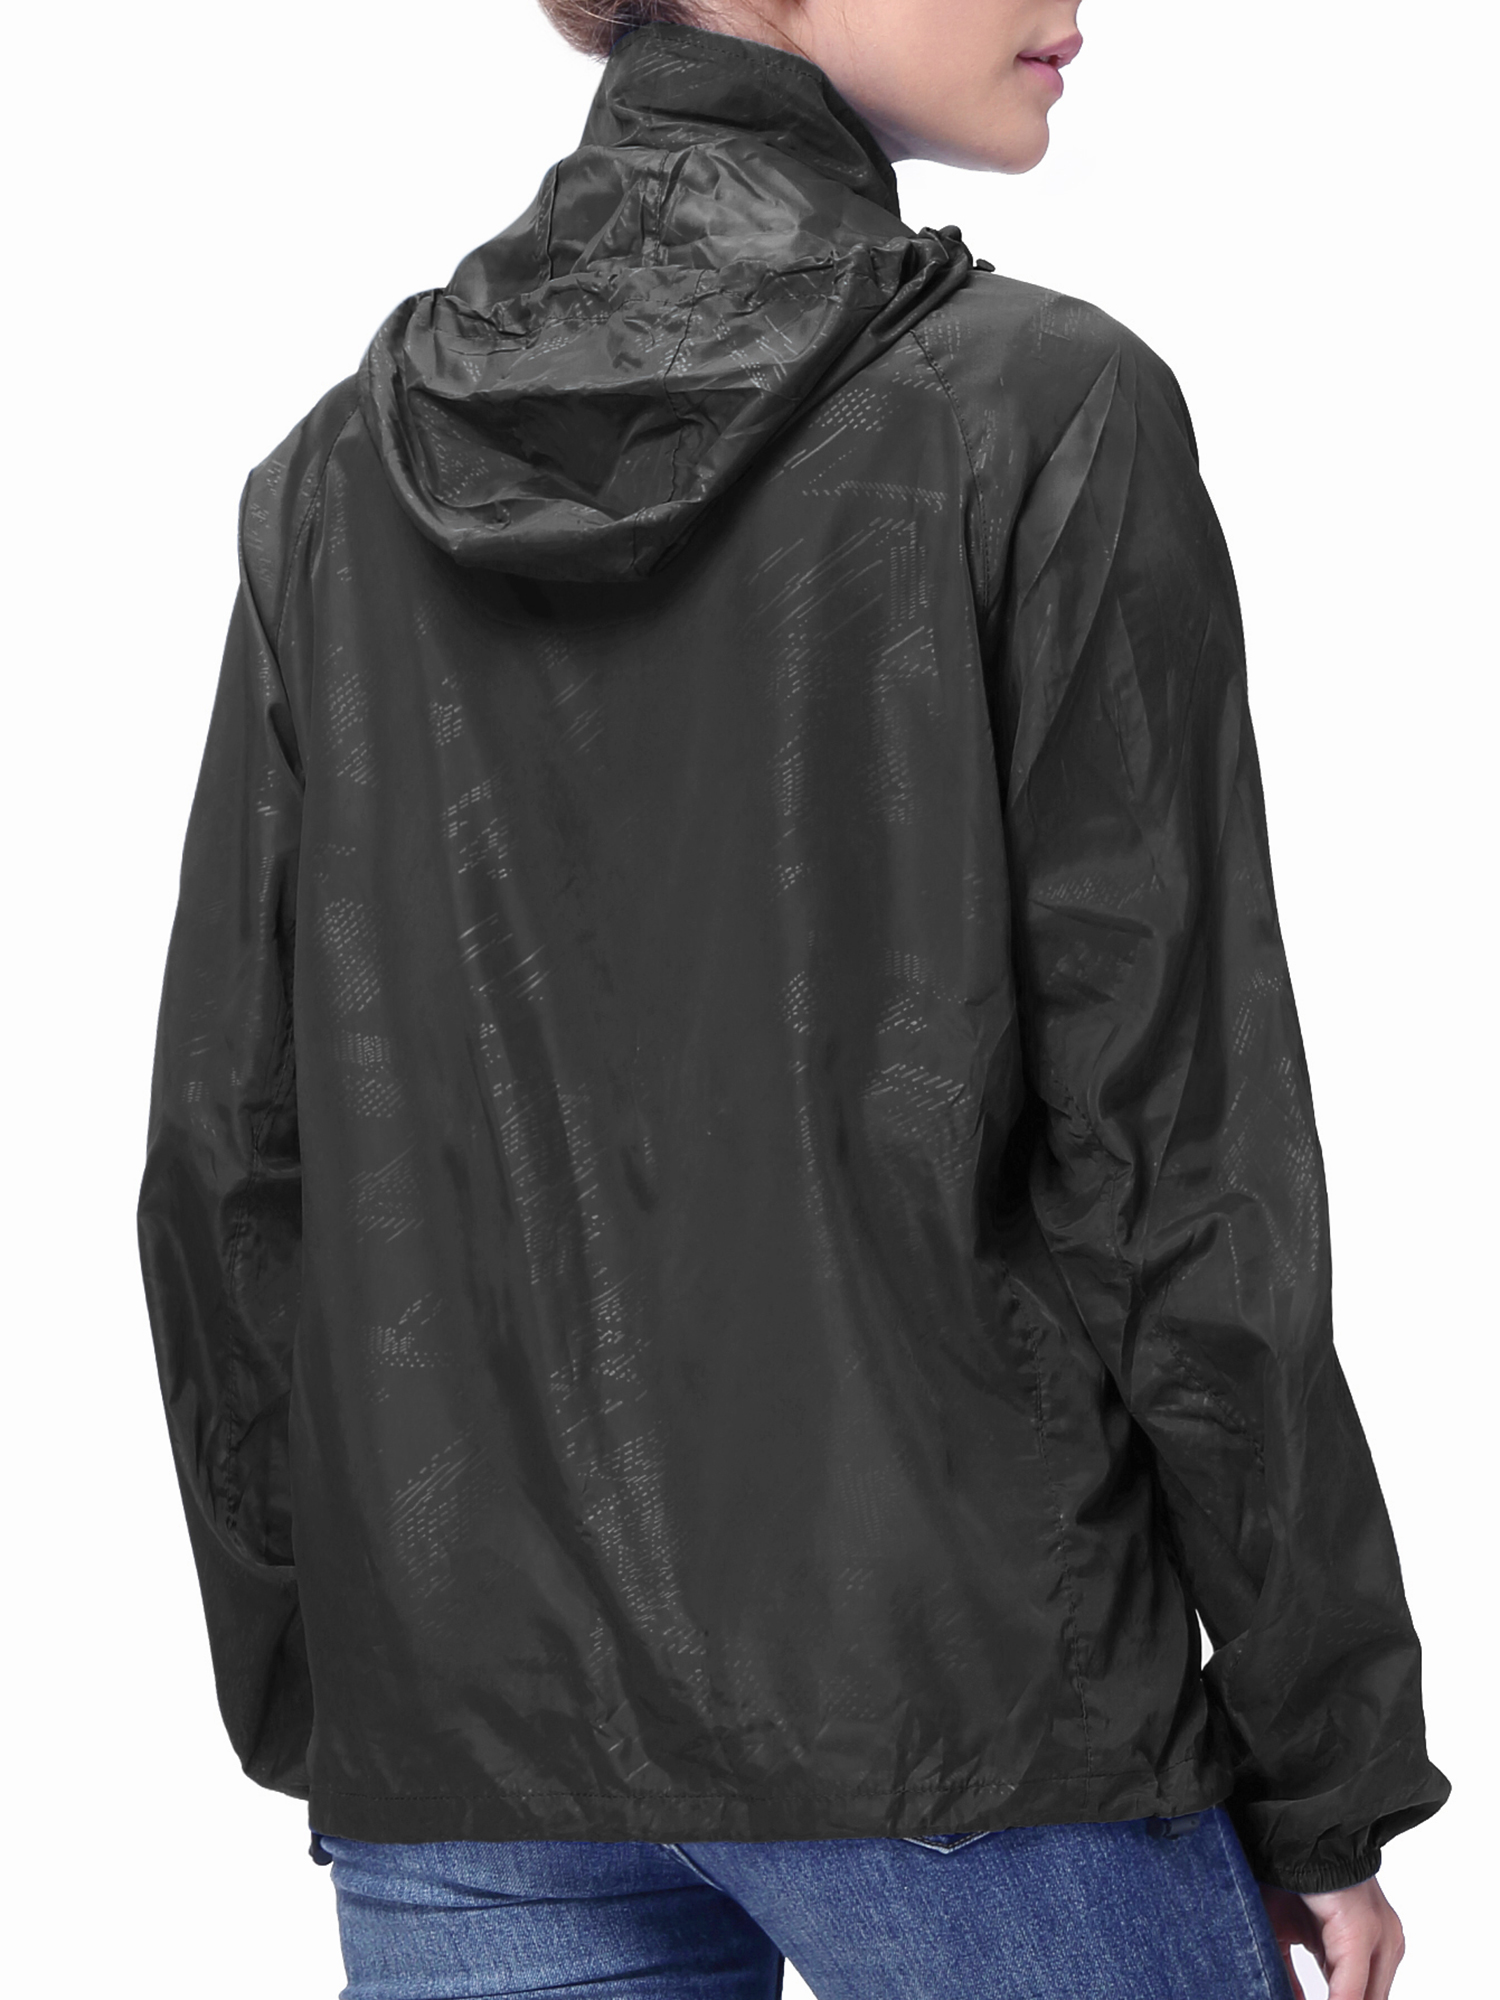 FOCUSSEXY Women's Hooded Rain Jacket Waterproof Windbreaker Hooded Rain Outdoor Poncho Running Jackets Womens Raincoat Packable Hooded Shirt Quick Dry - image 2 of 8